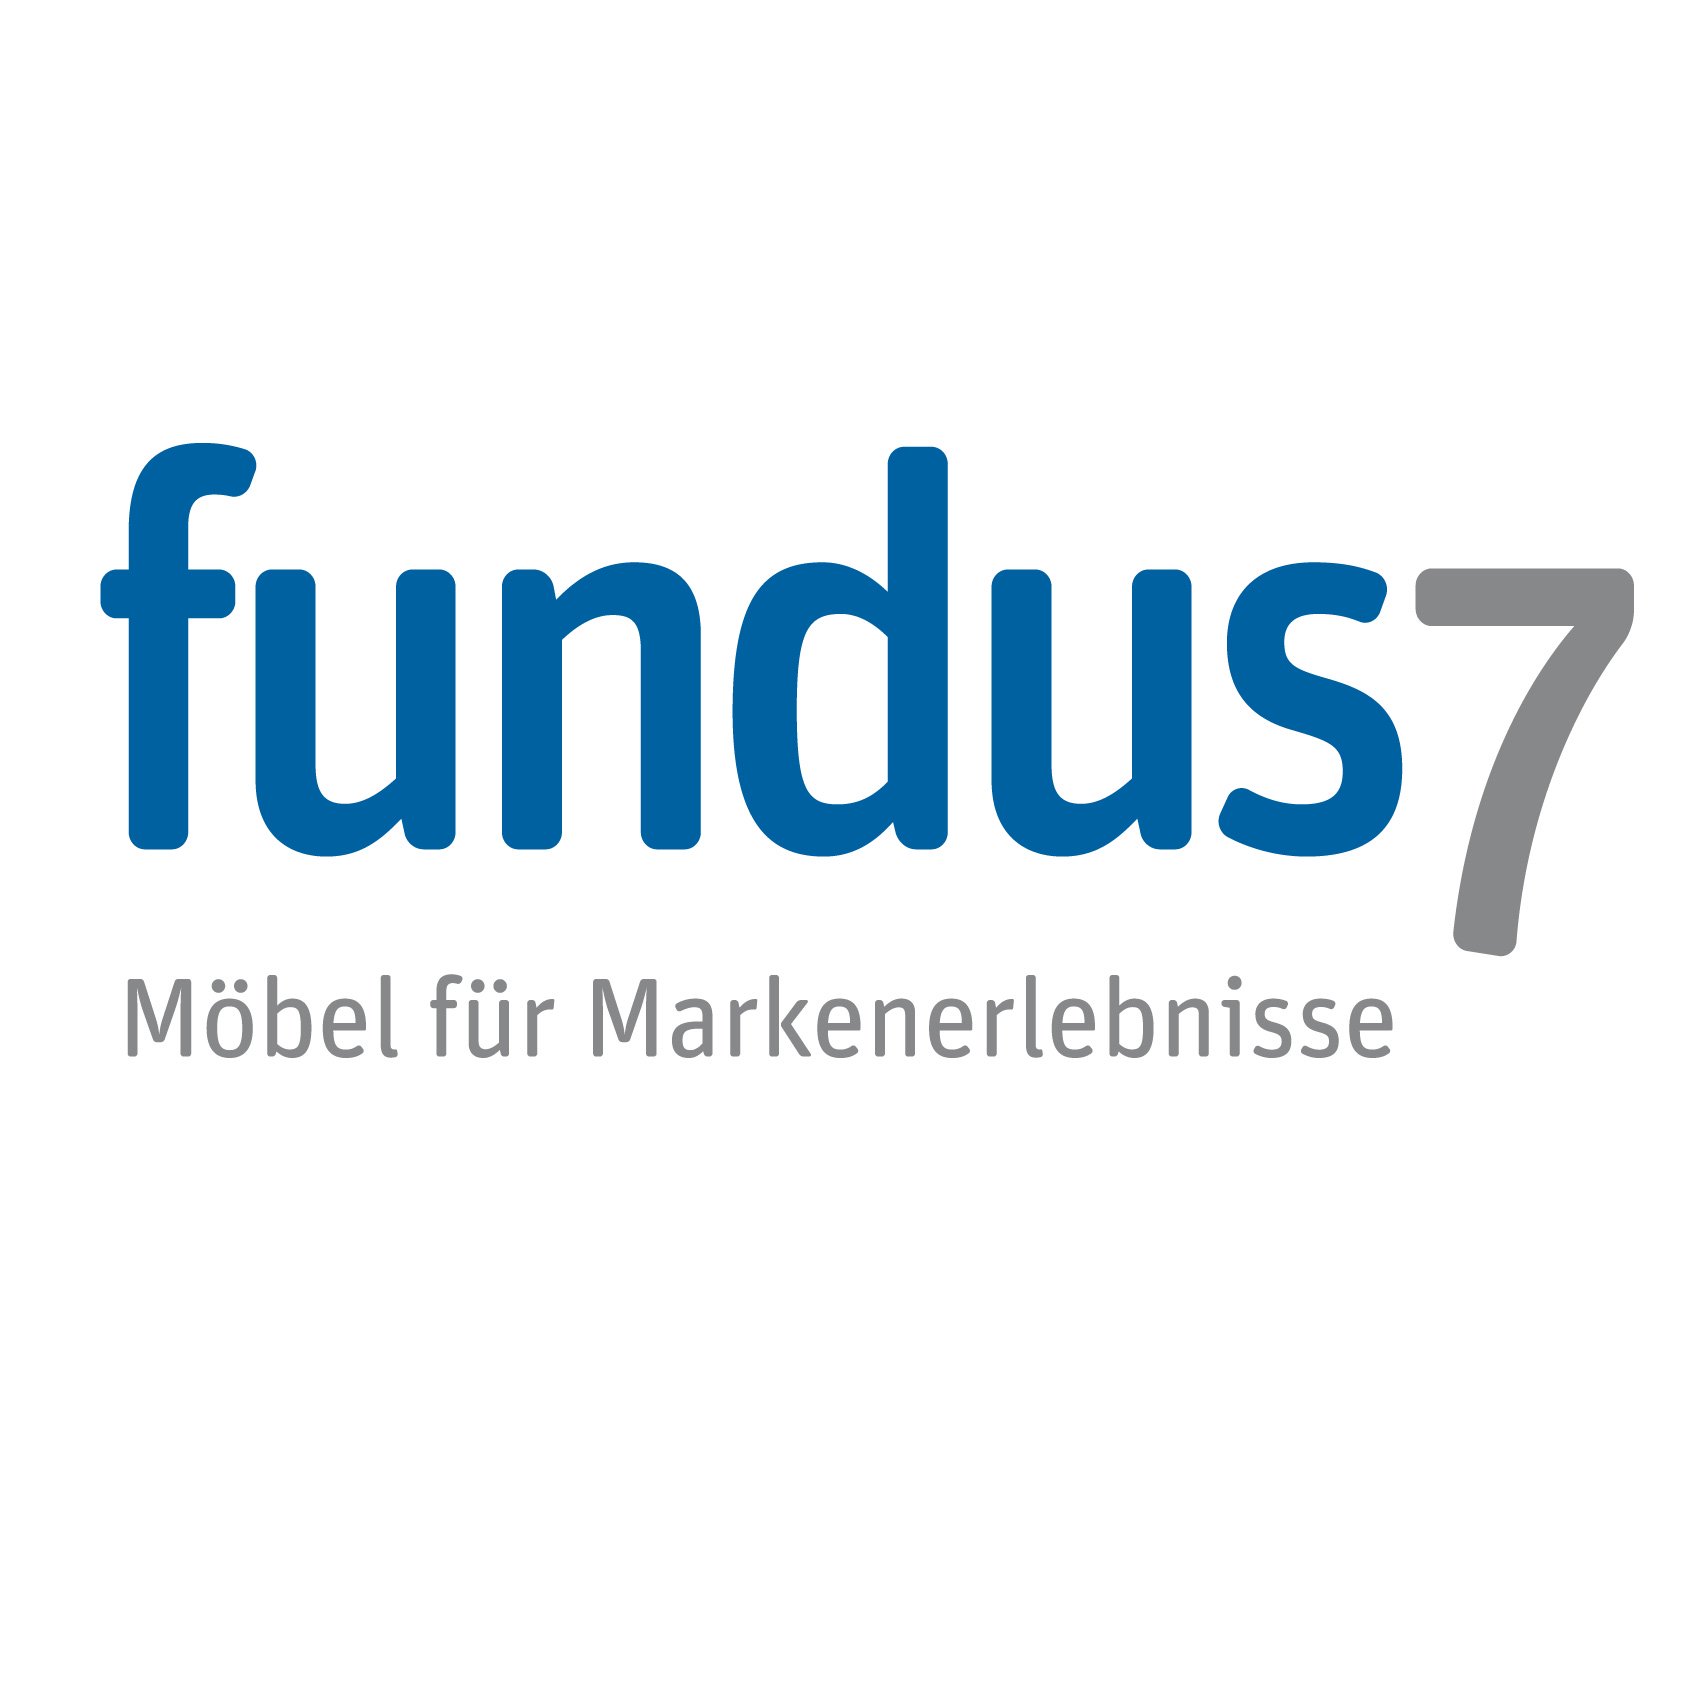 fundus7 GmbH